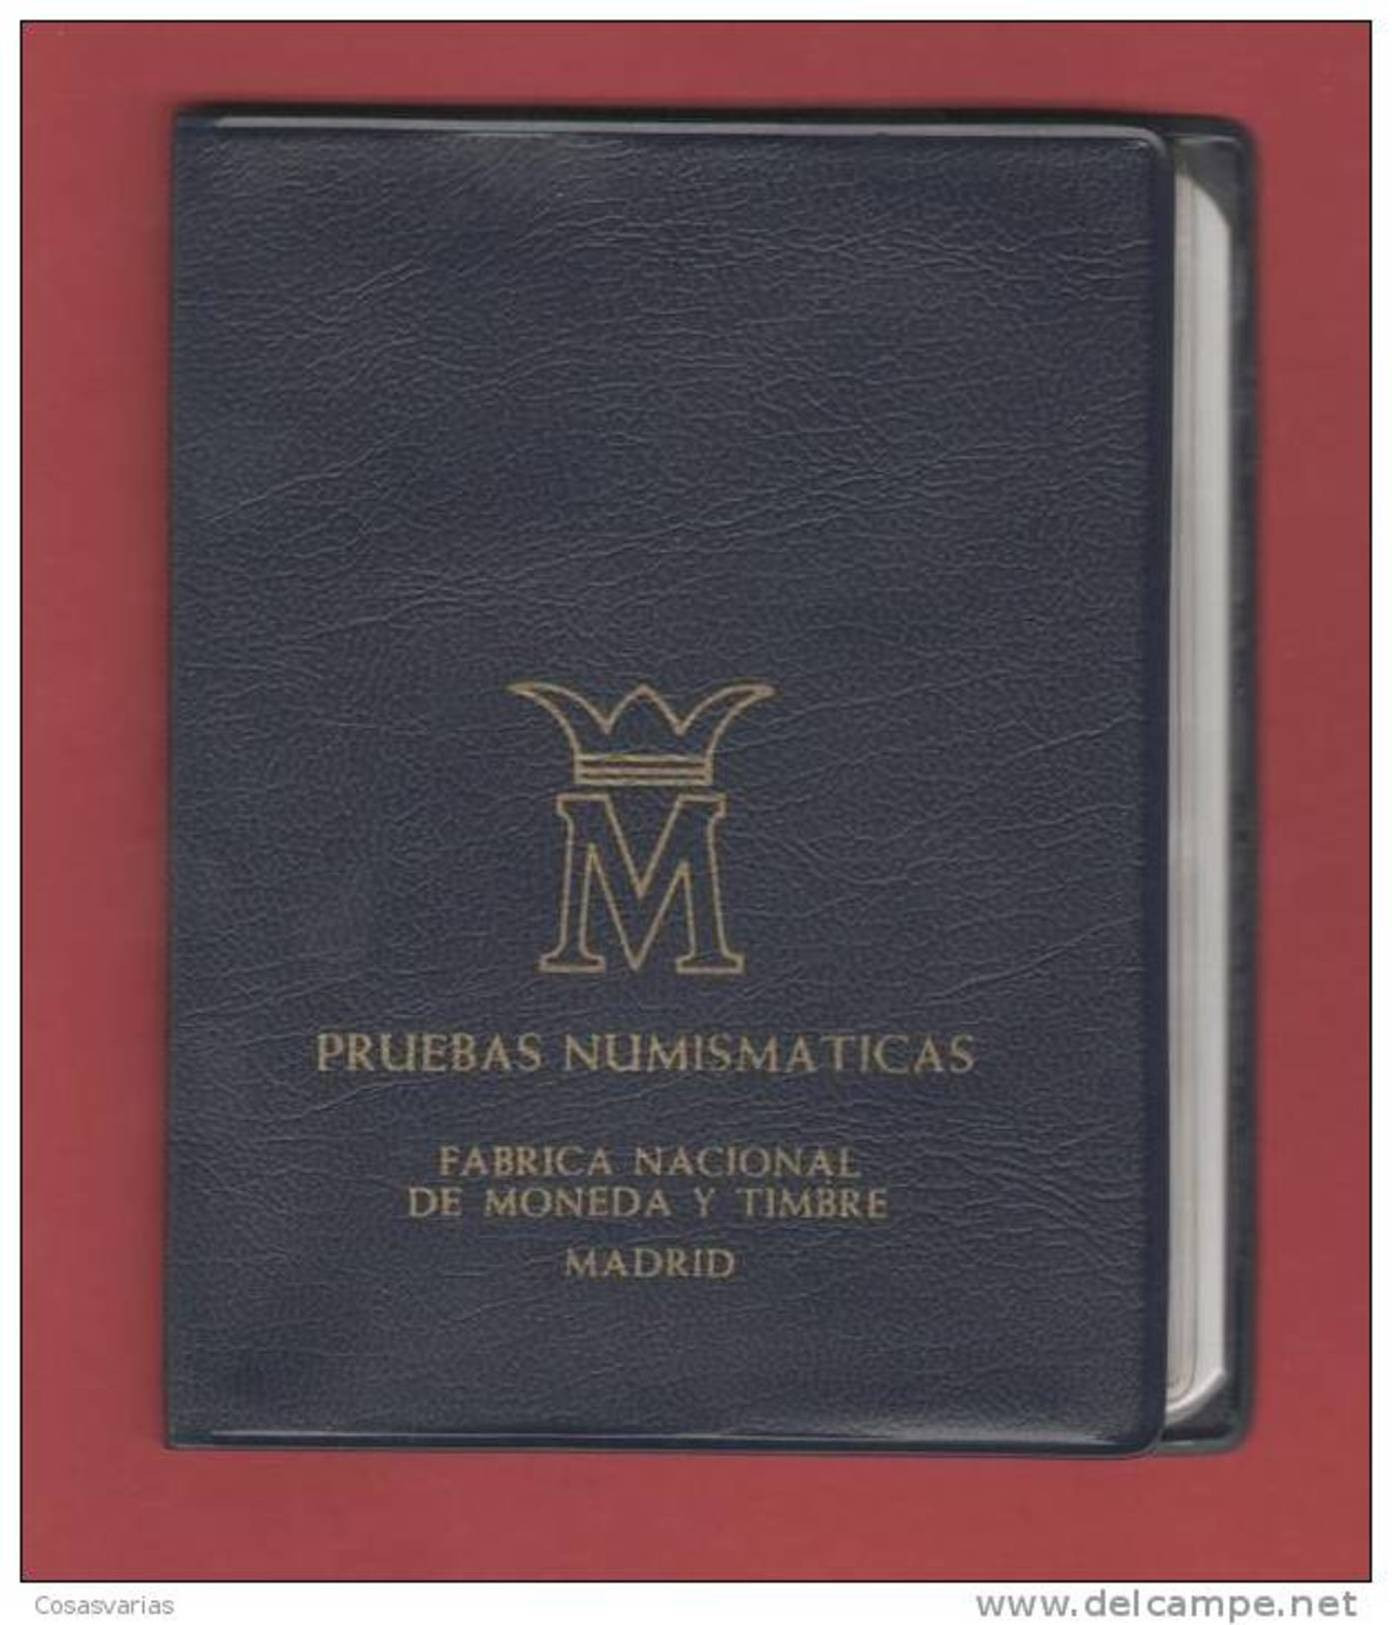 NUMISMATIC SPANISH SET - 4 COINS - 1975 * 1979 - PROOF - JUAN CARLOS I - Madrid Mint  NUMISMATIQUE  NUMISMATIK - Sets Sin Usar &  Sets De Prueba